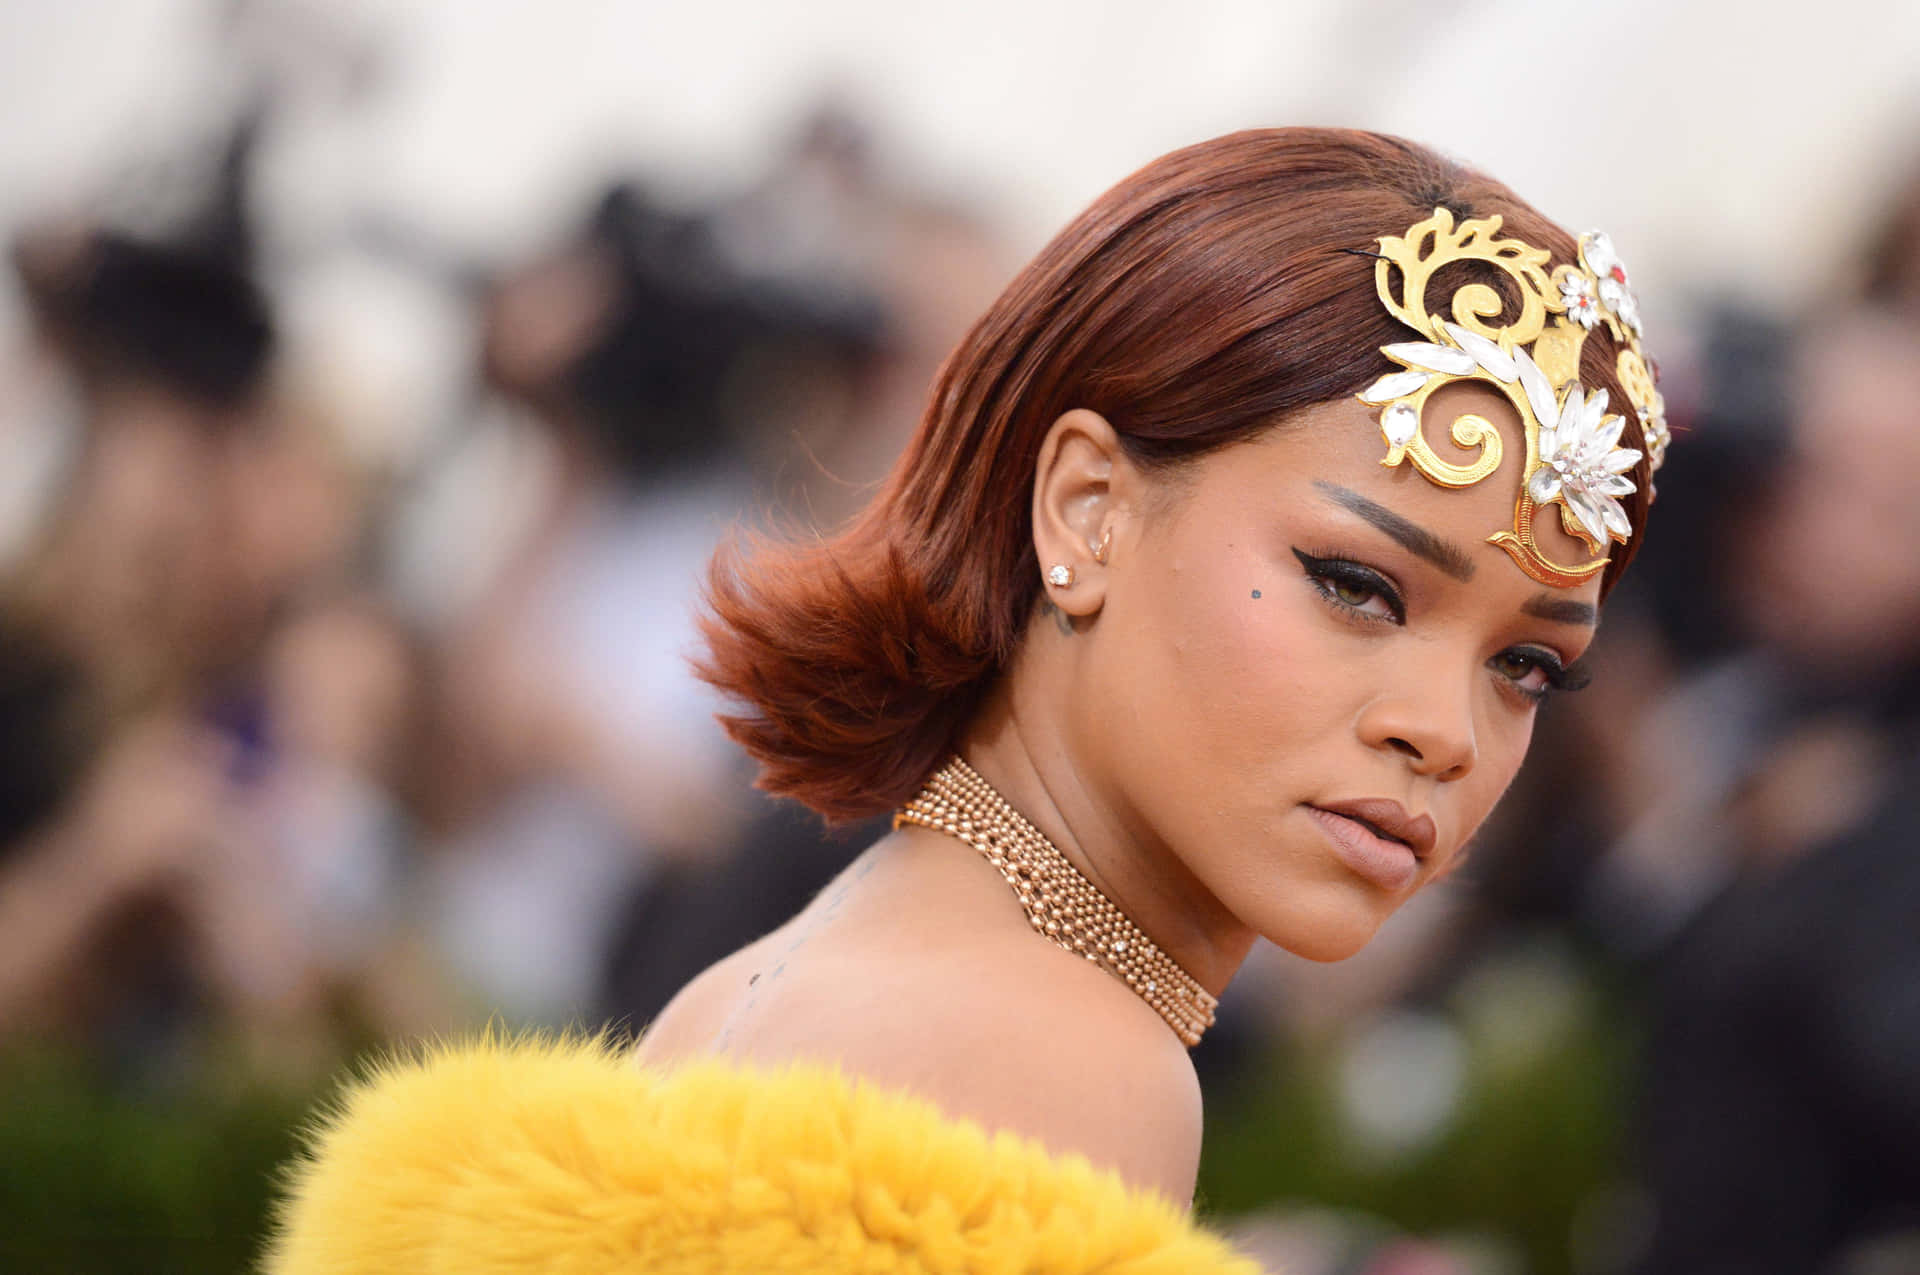 "Music and Makeup Legend, Rihanna"